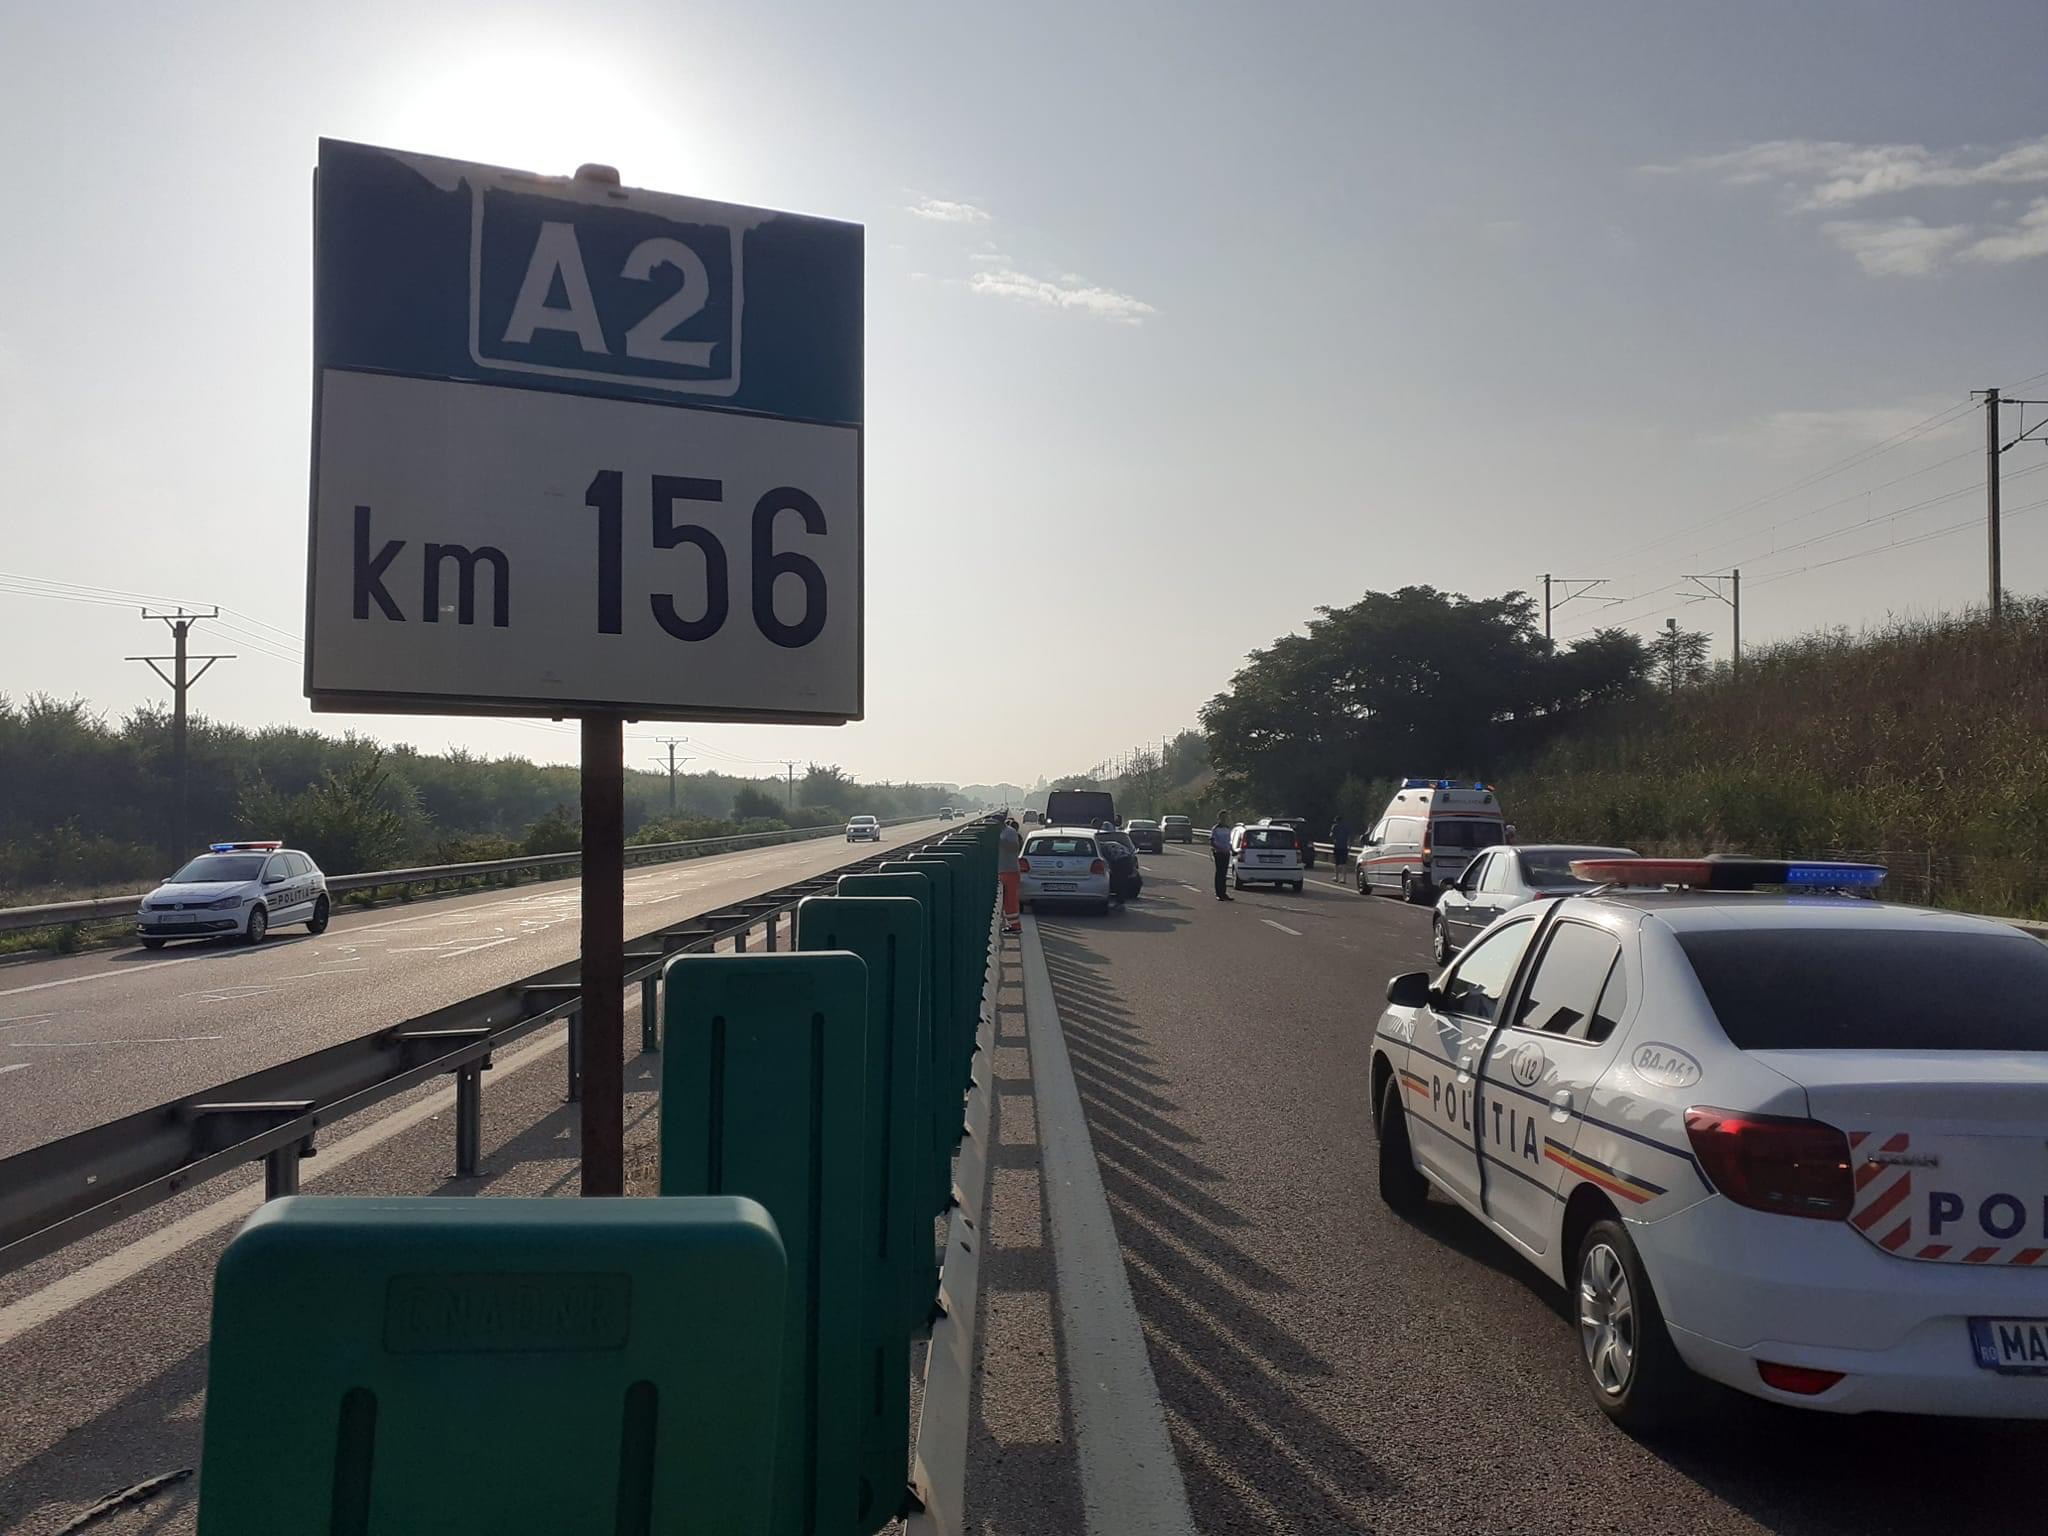 Trafic restricționat pe autostrada A2 la km 156